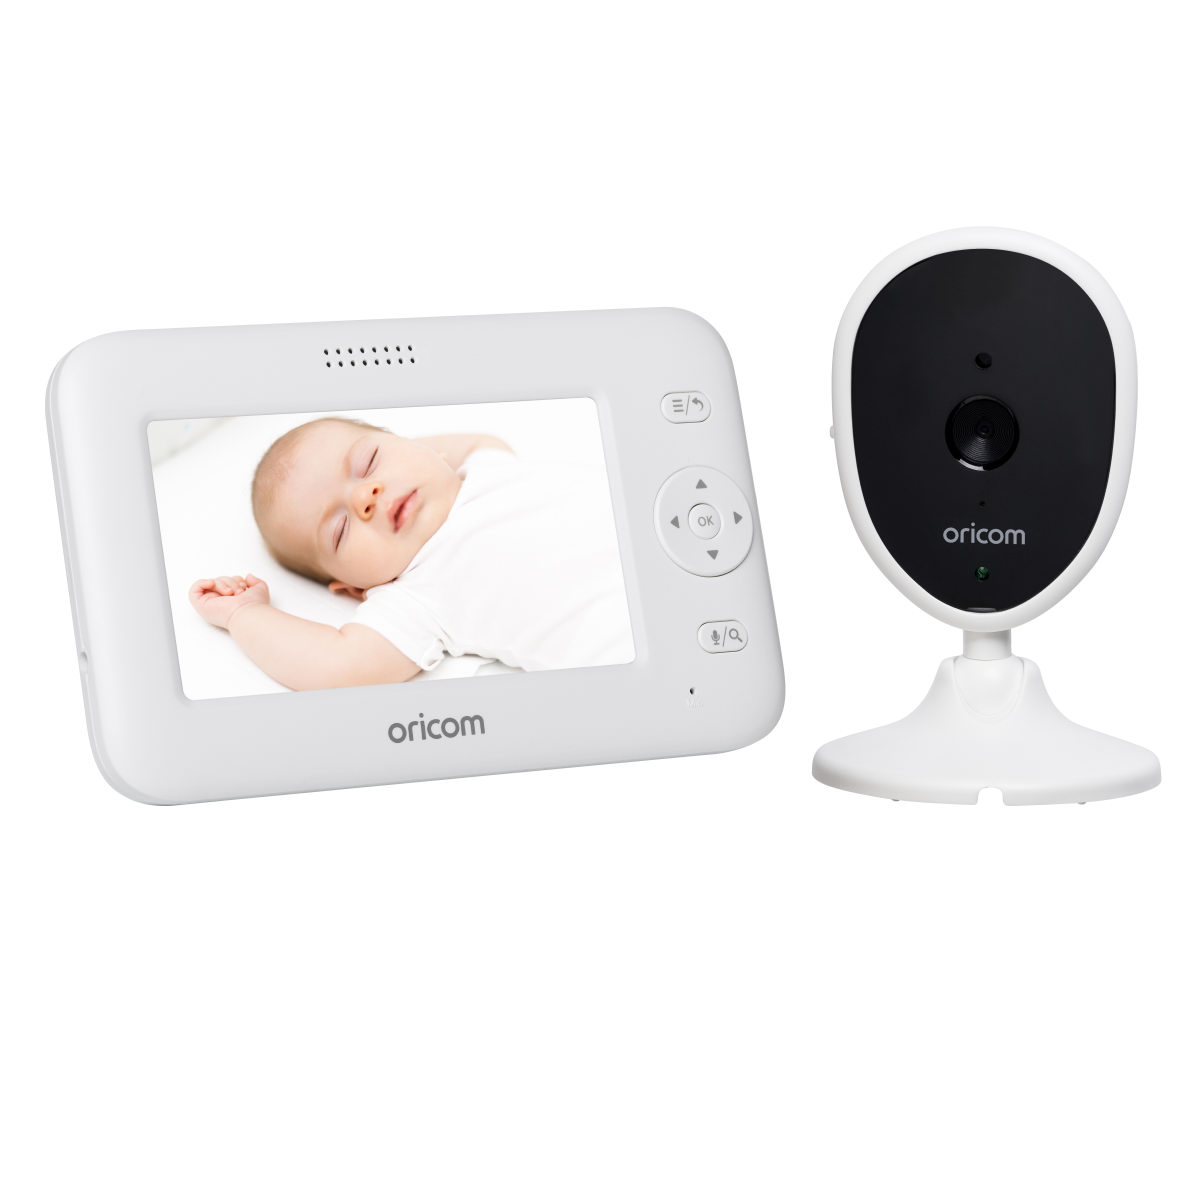 Digital Video Baby Monitor Online in 